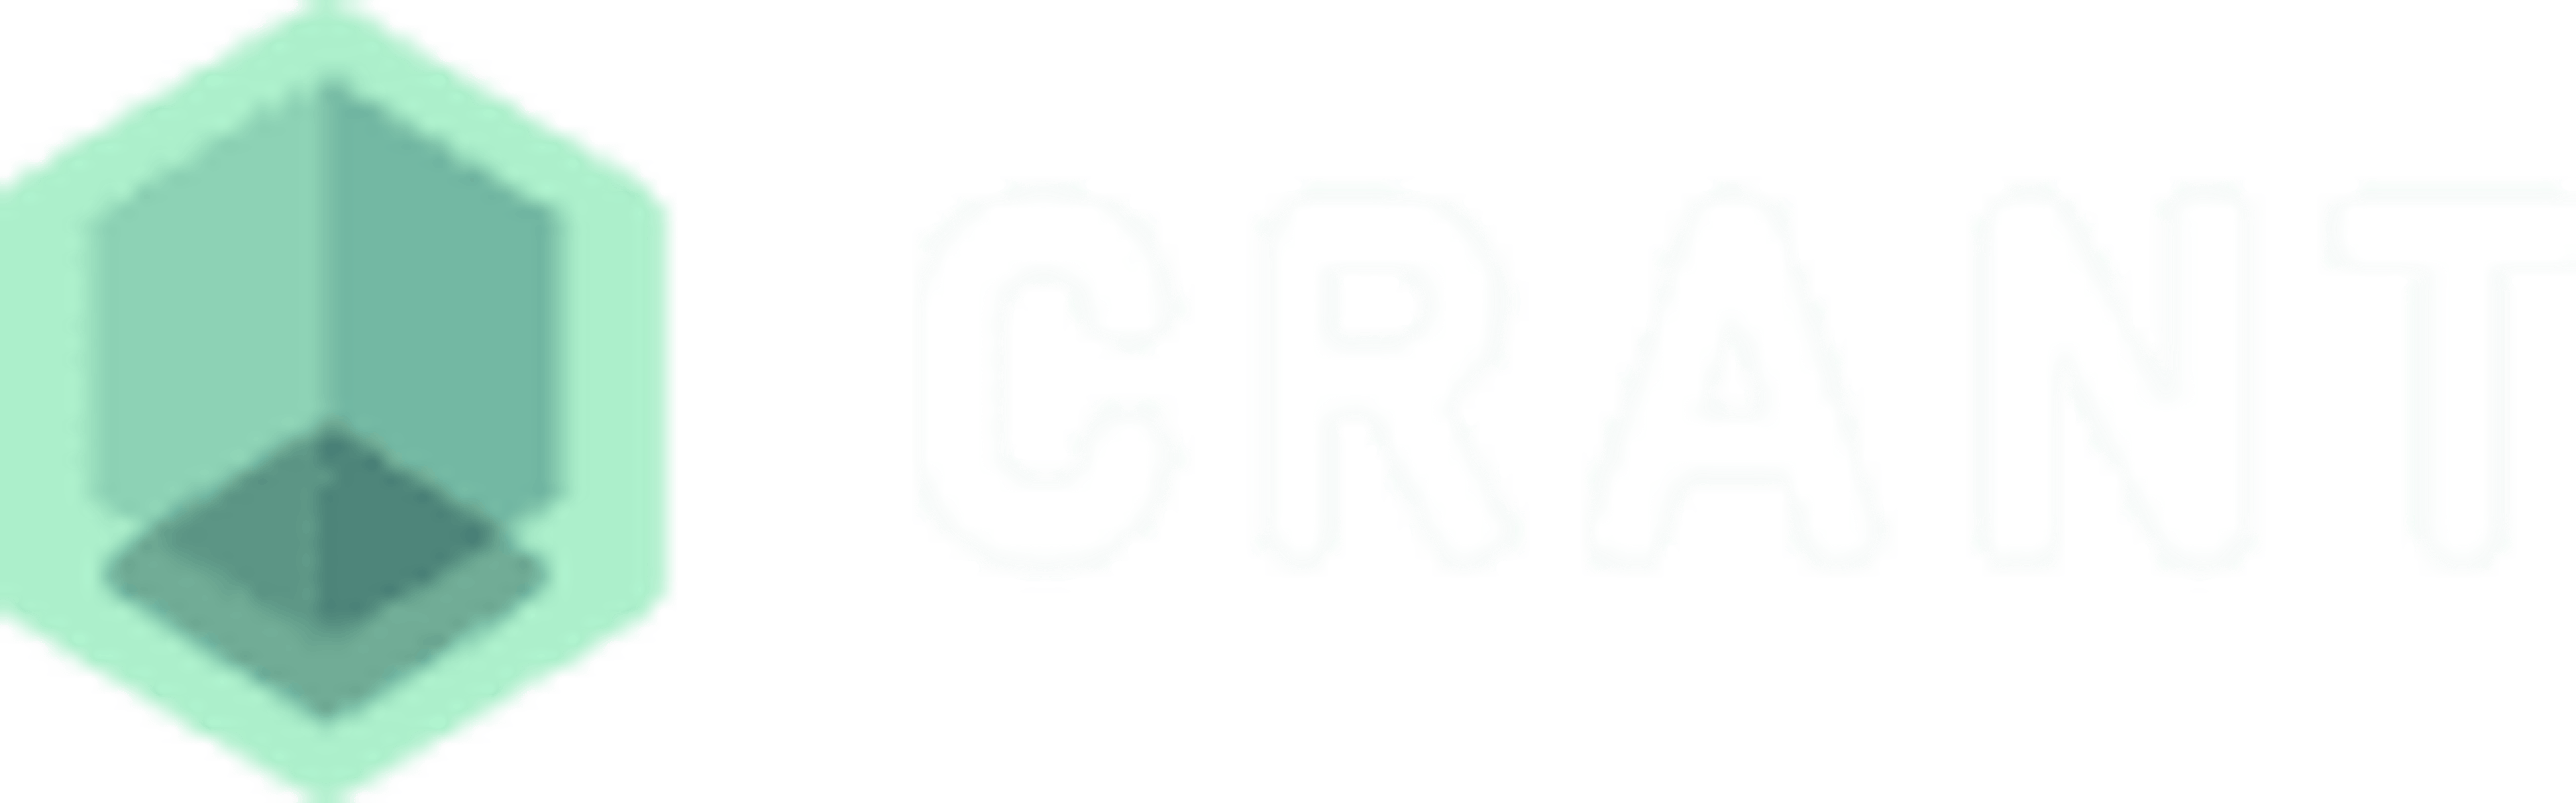 Crant logo